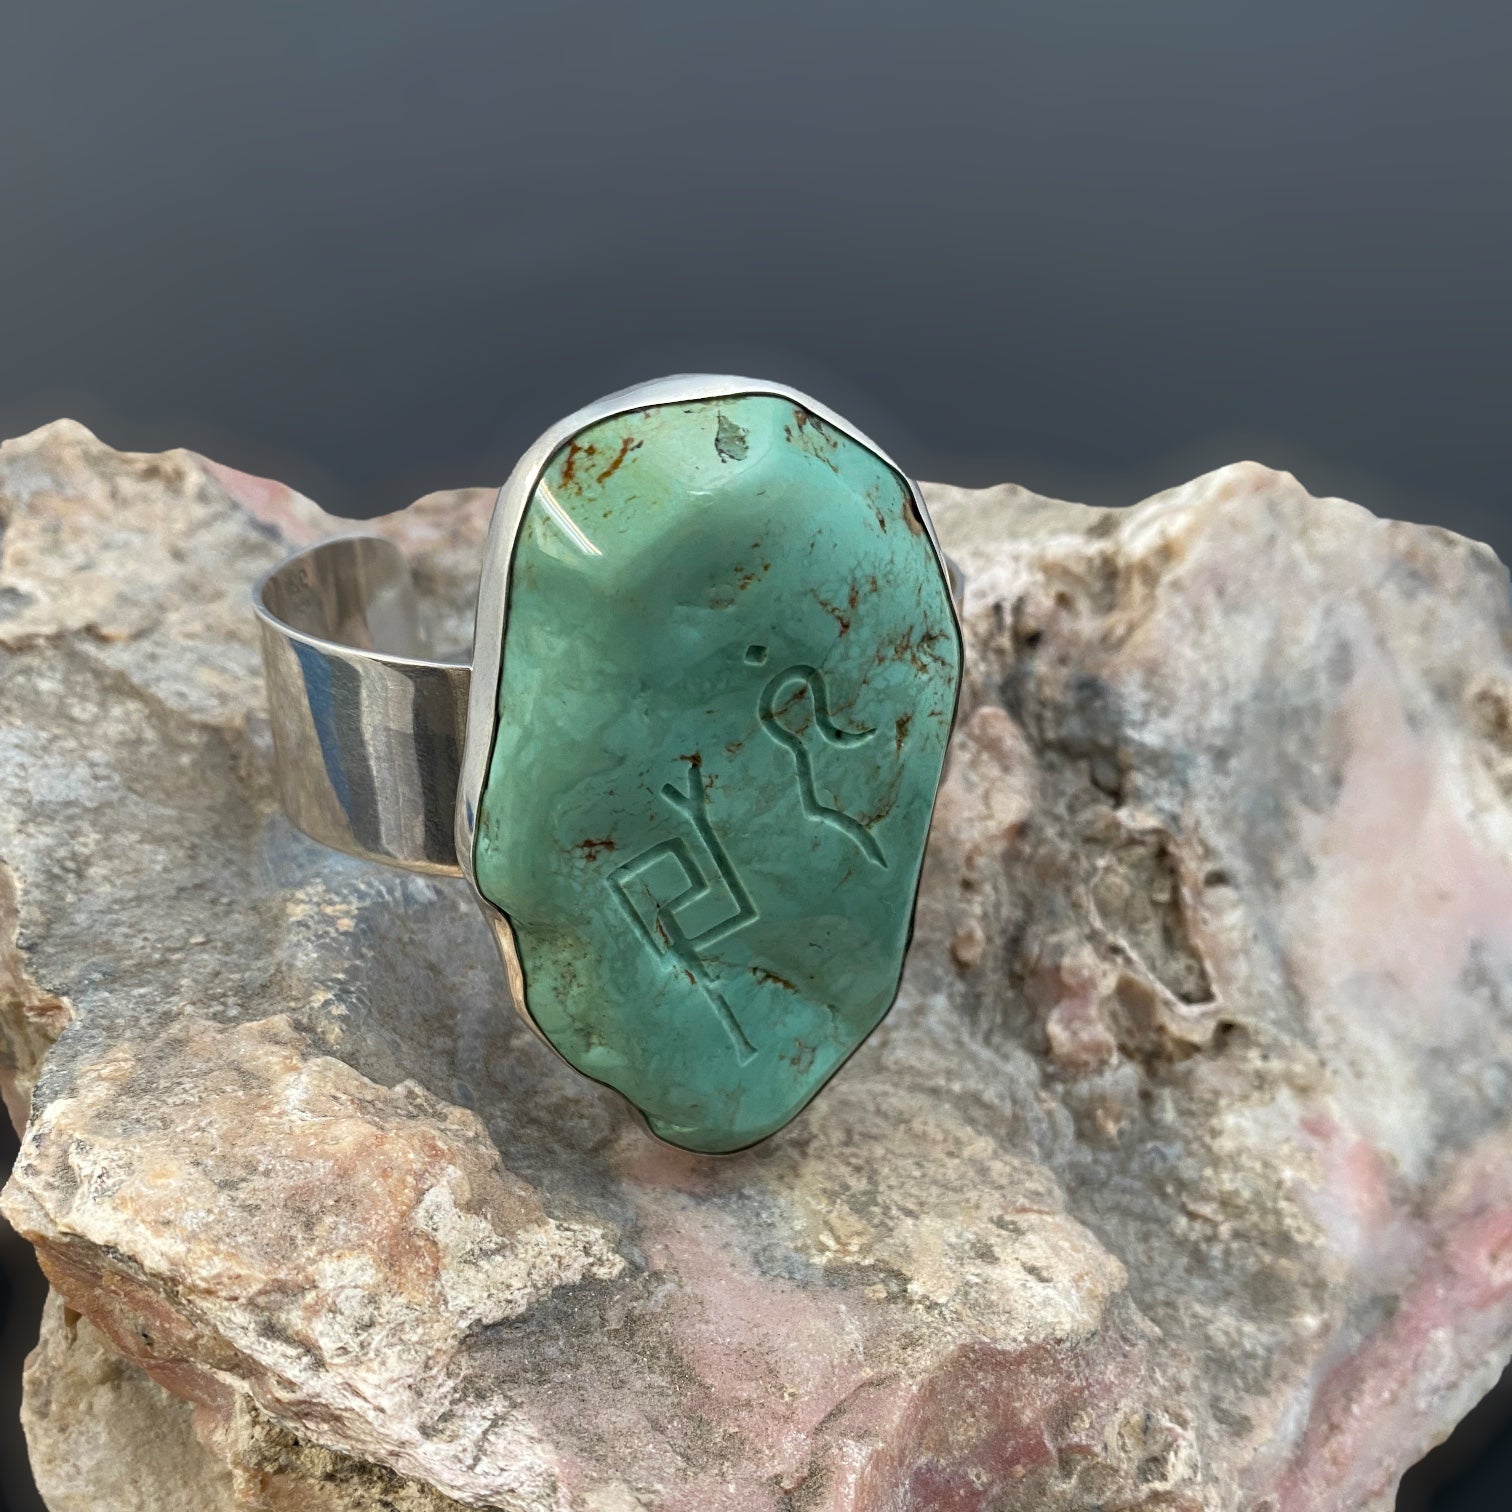 Arizona Turquoise Sterling Silver Cuff Bracelet with Divine Feminine & Sacred Masculine Symbols